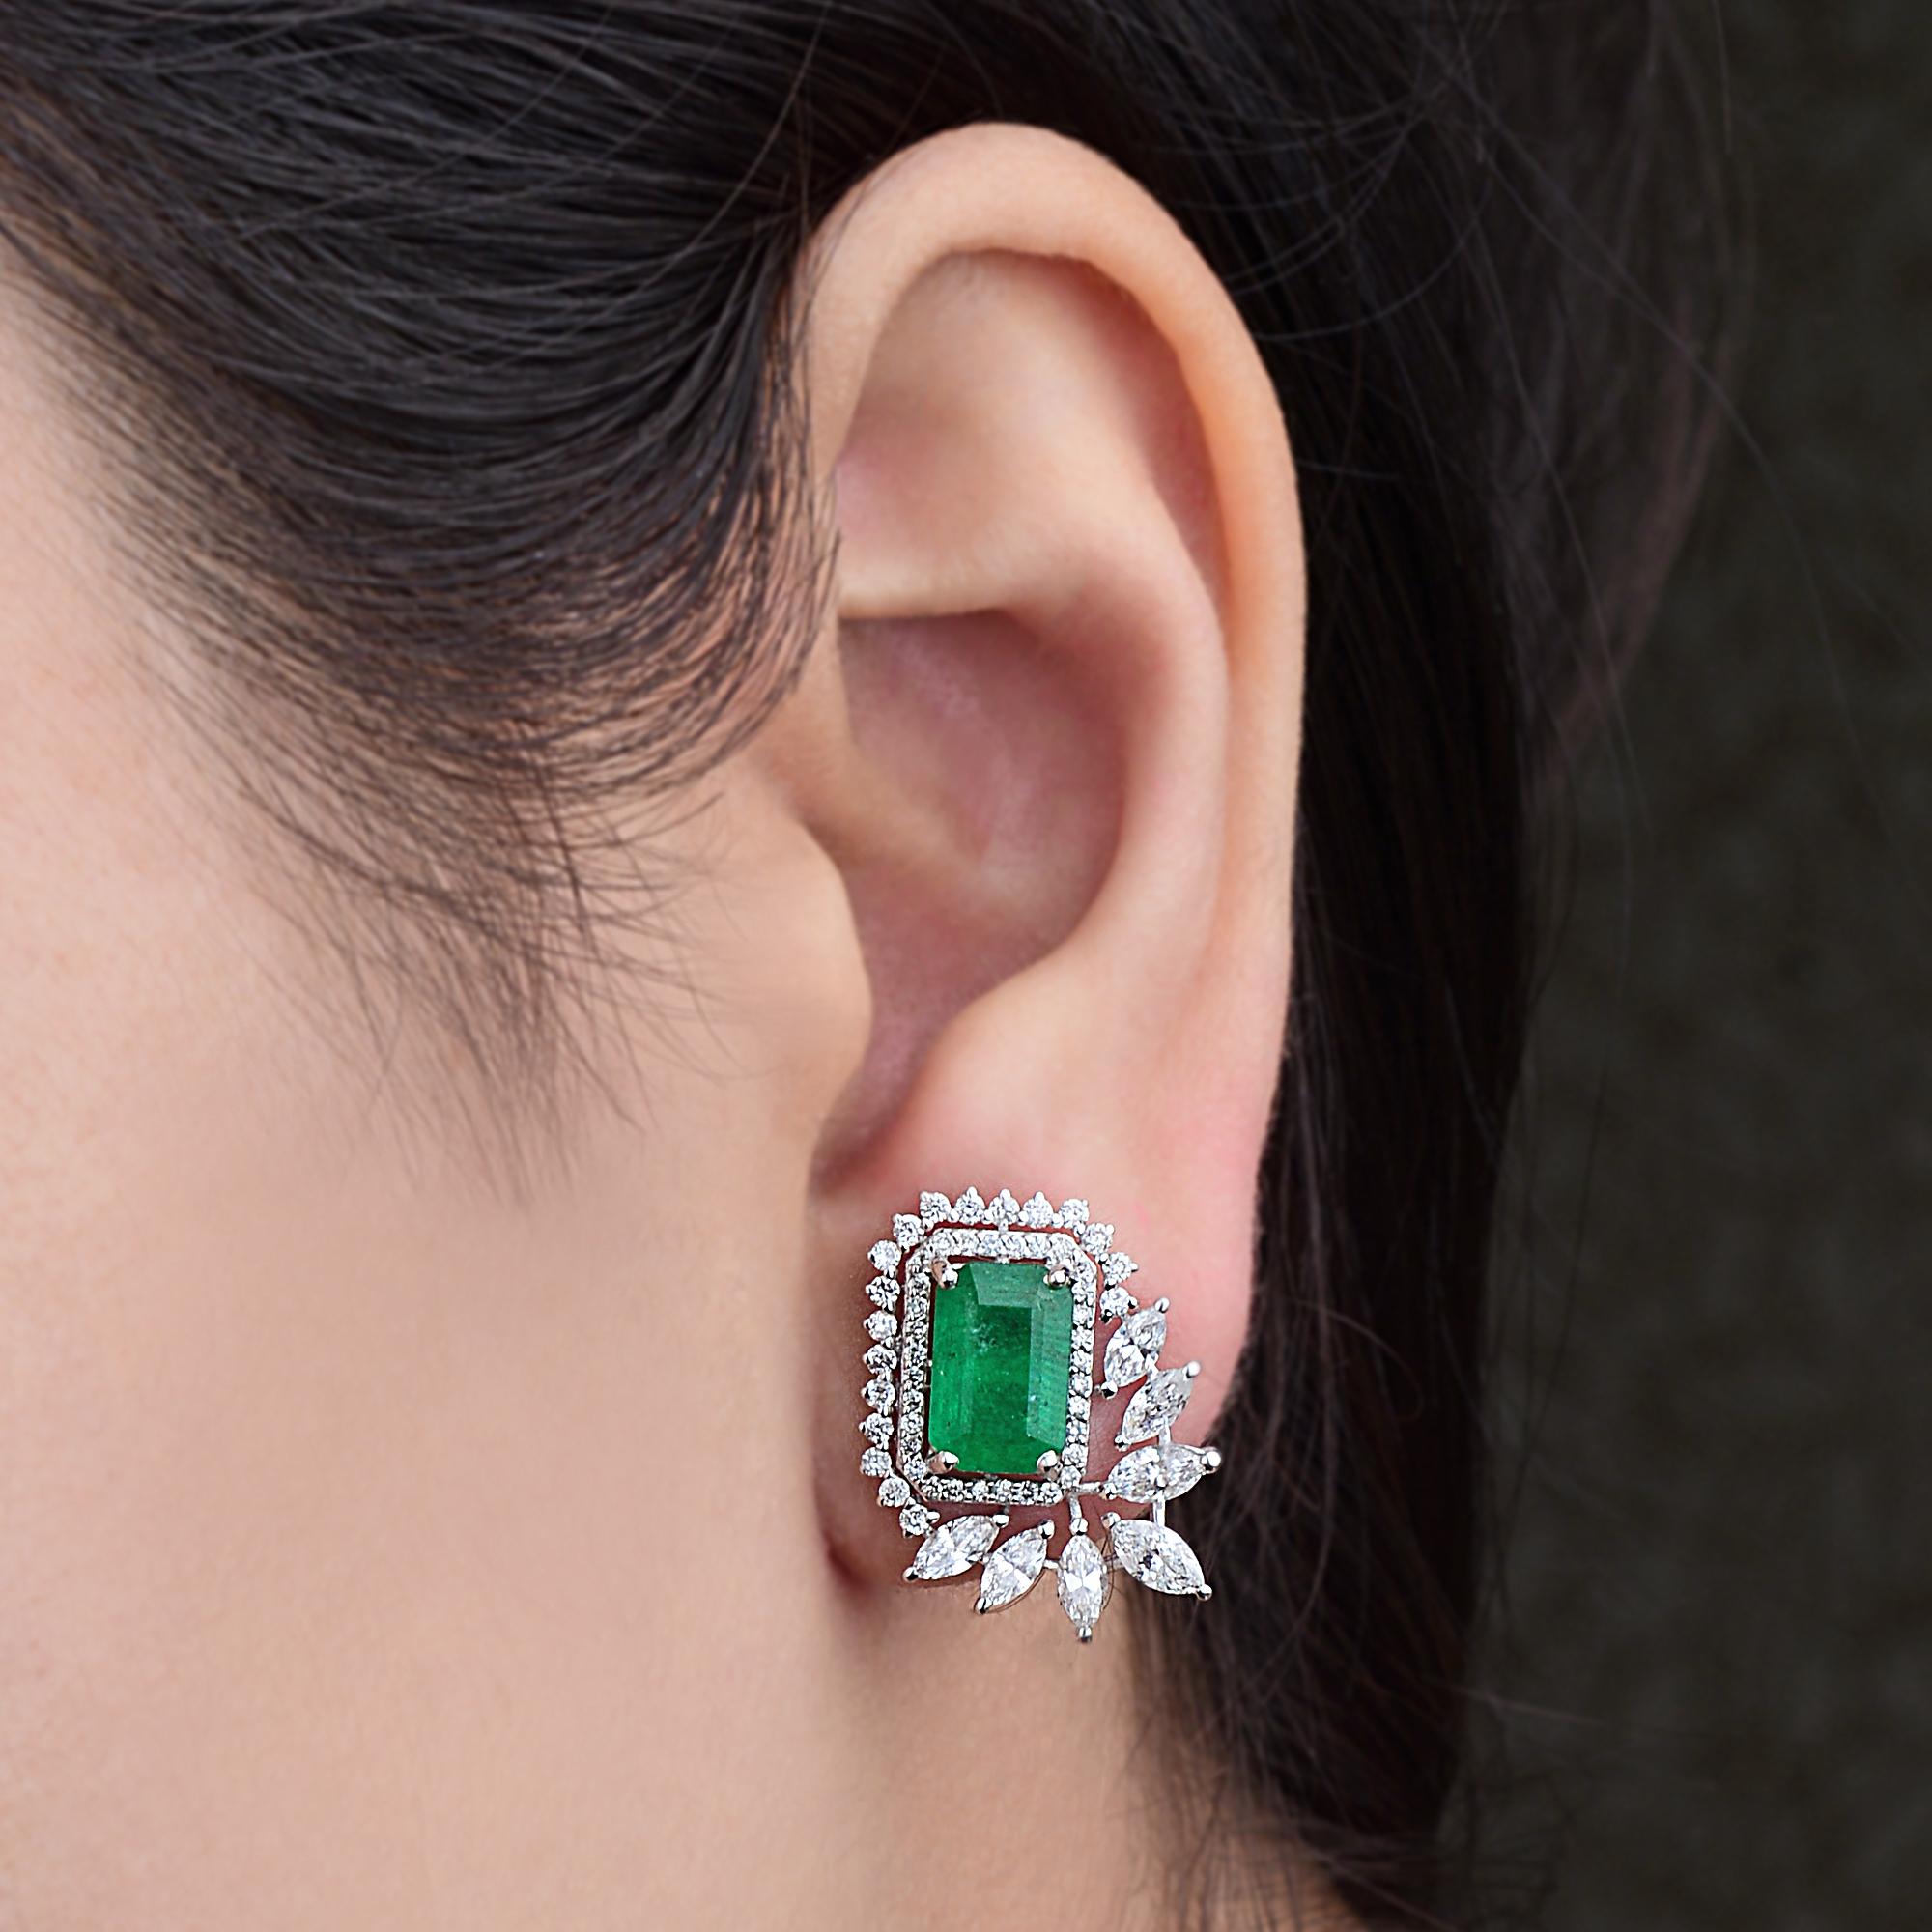 Modern Zambian Emerald Gemstone Earrings Diamond 14 Karat White Gold Handmade Jewelry For Sale